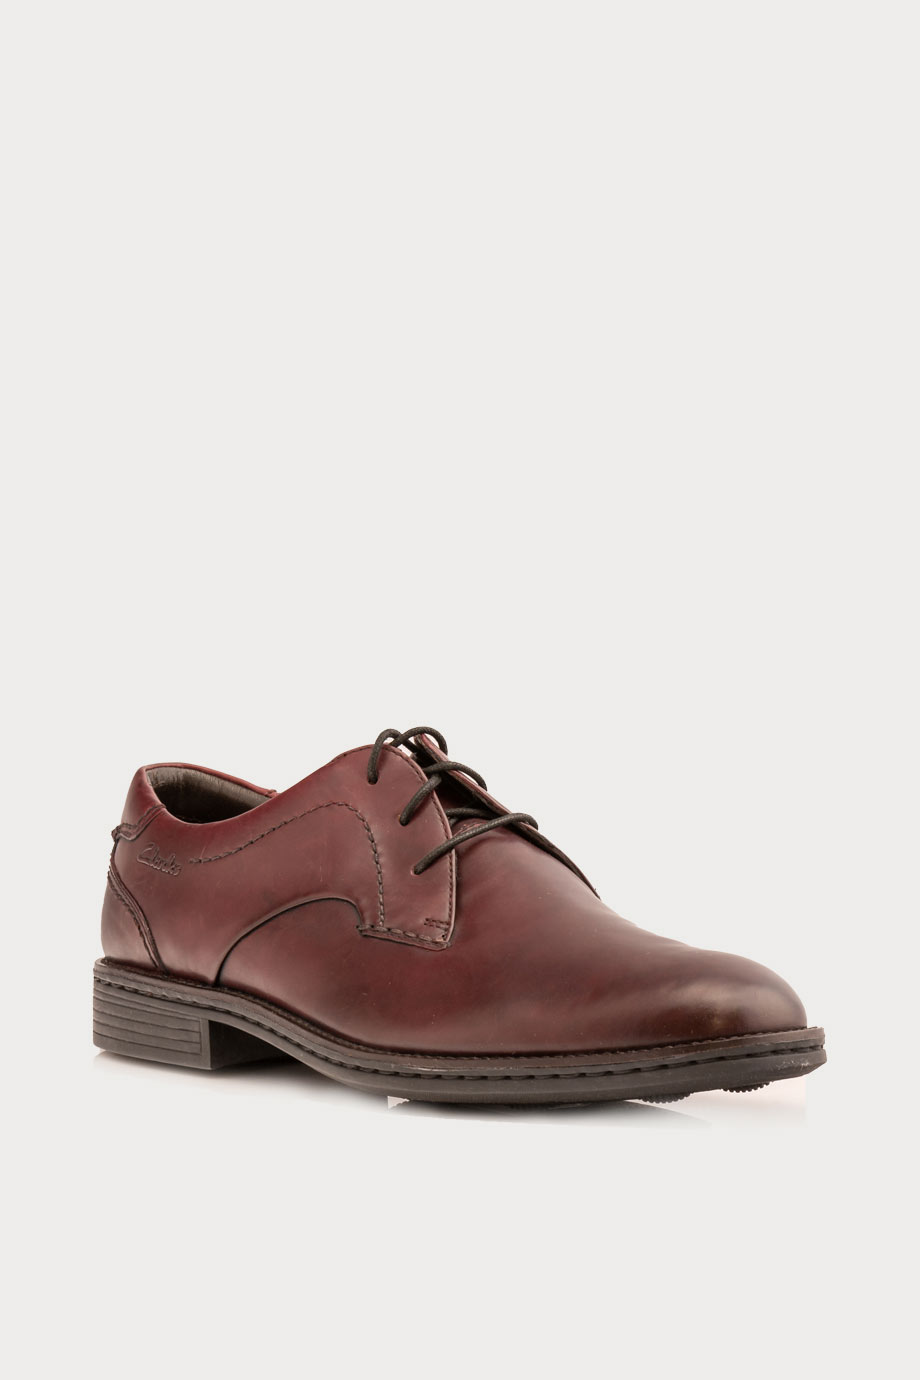 spiridoula metheniti shoes xalkida p gable classic oxblood leather clarks 2